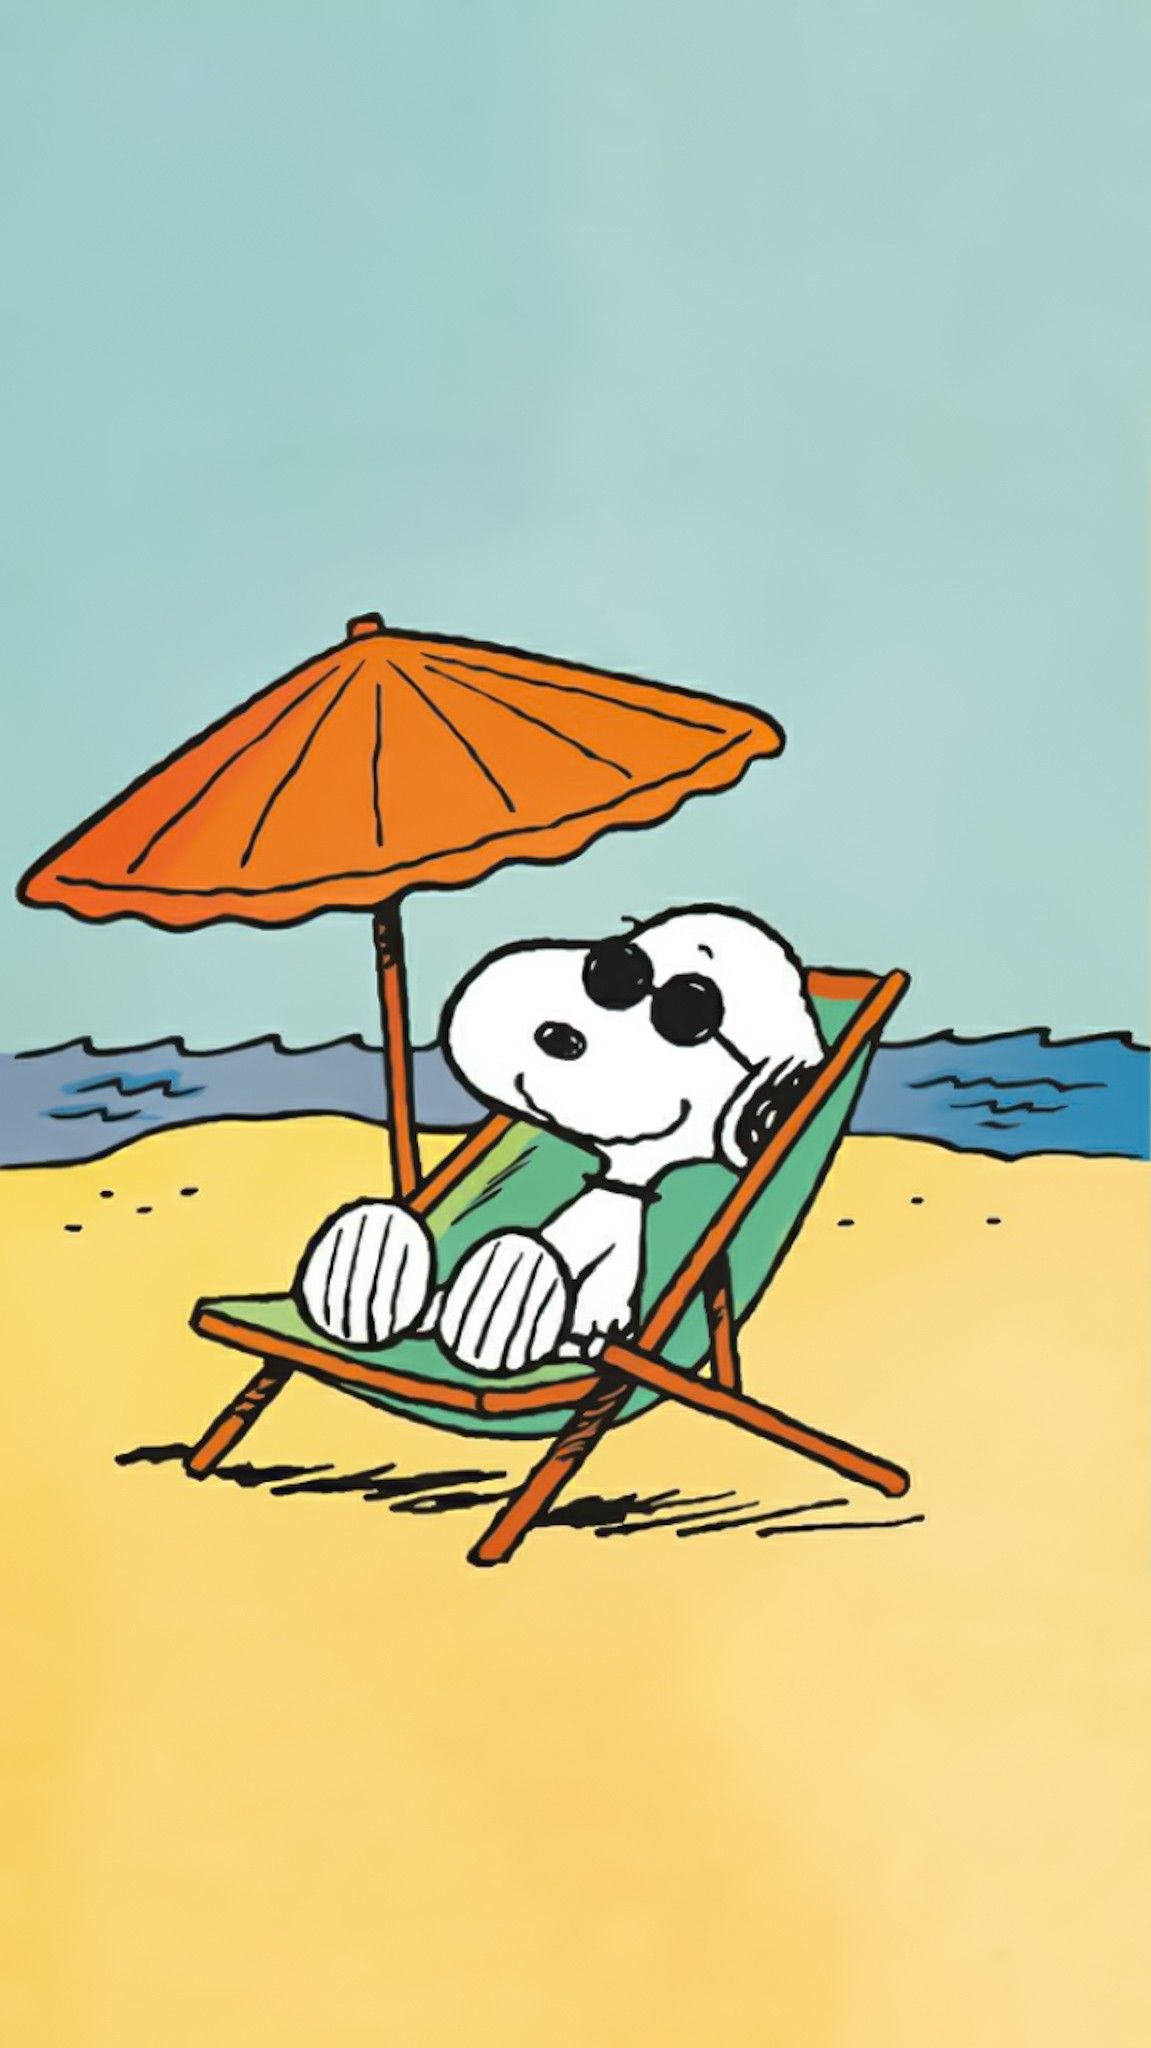 Snoopy Wallpaper Download - Wallpaperforu